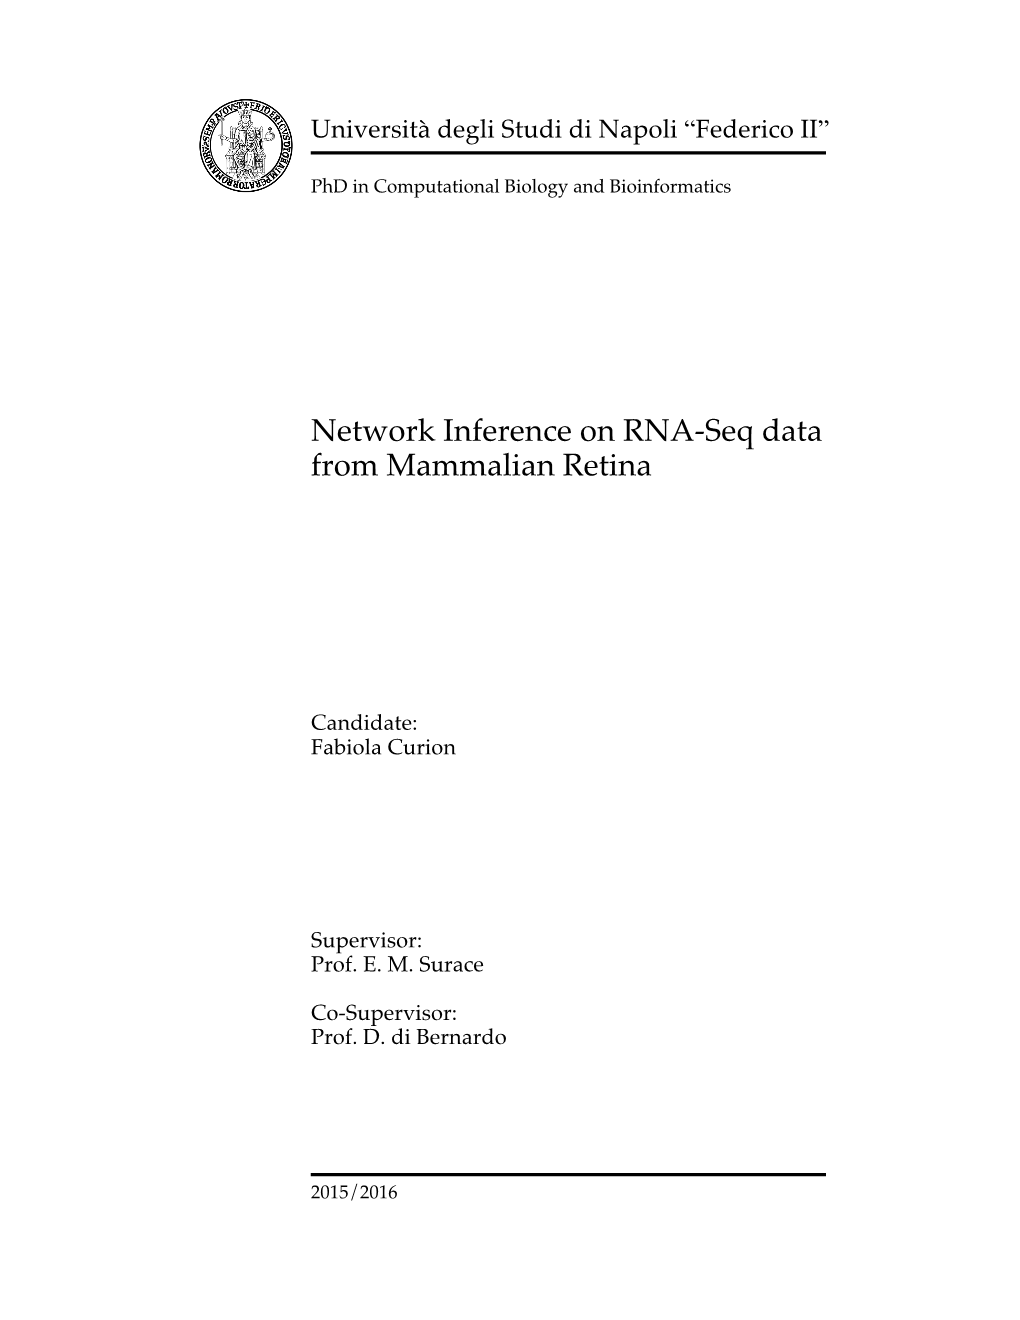 Network Inference on RNA-Seq Data from Mammalian Retina